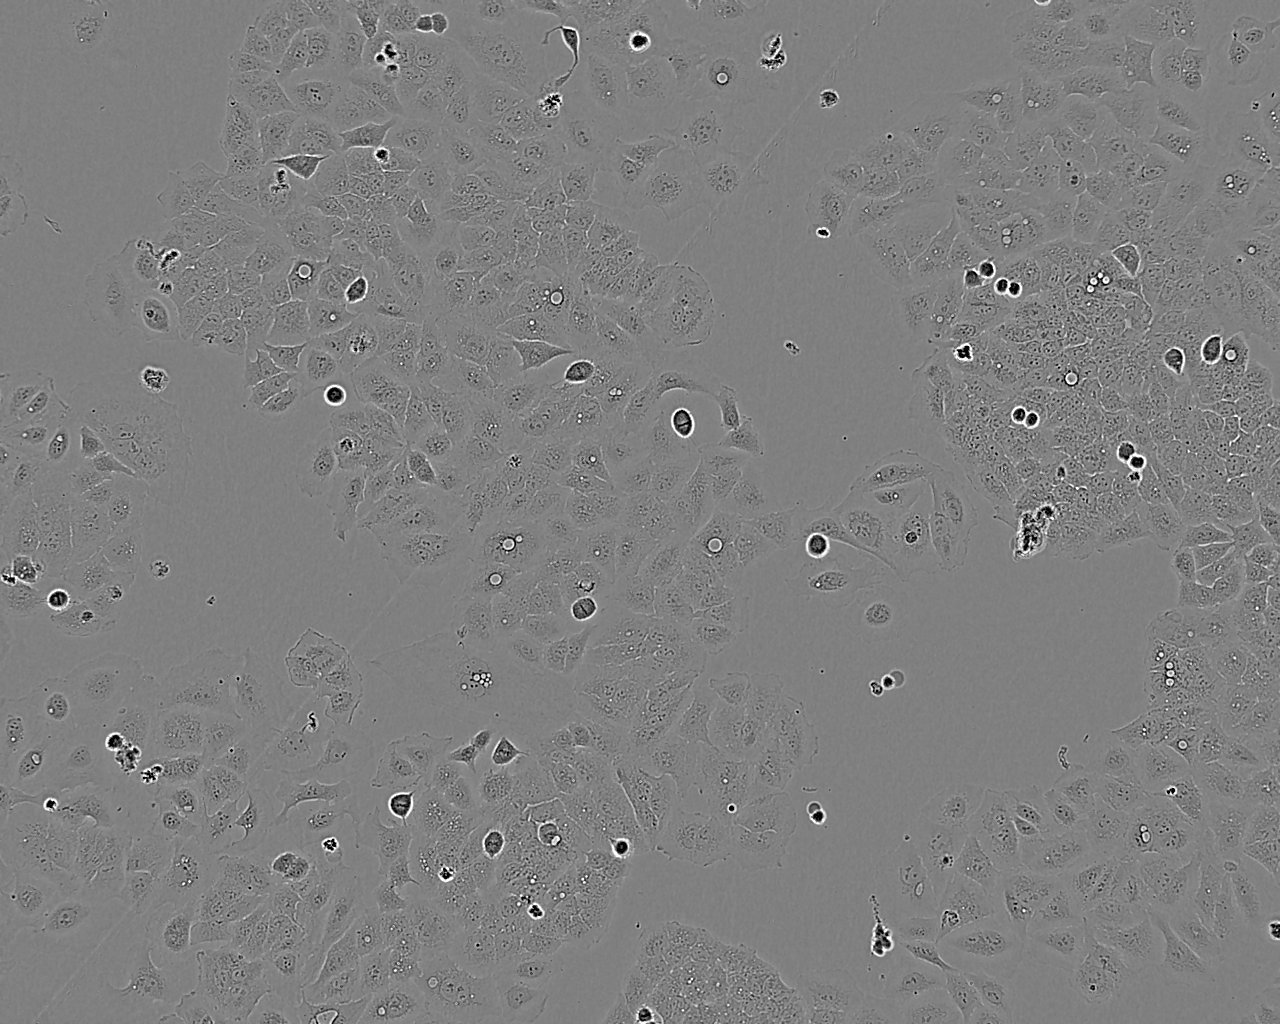 ACC-3 epithelioid cells人涎腺腺样囊性癌细胞系